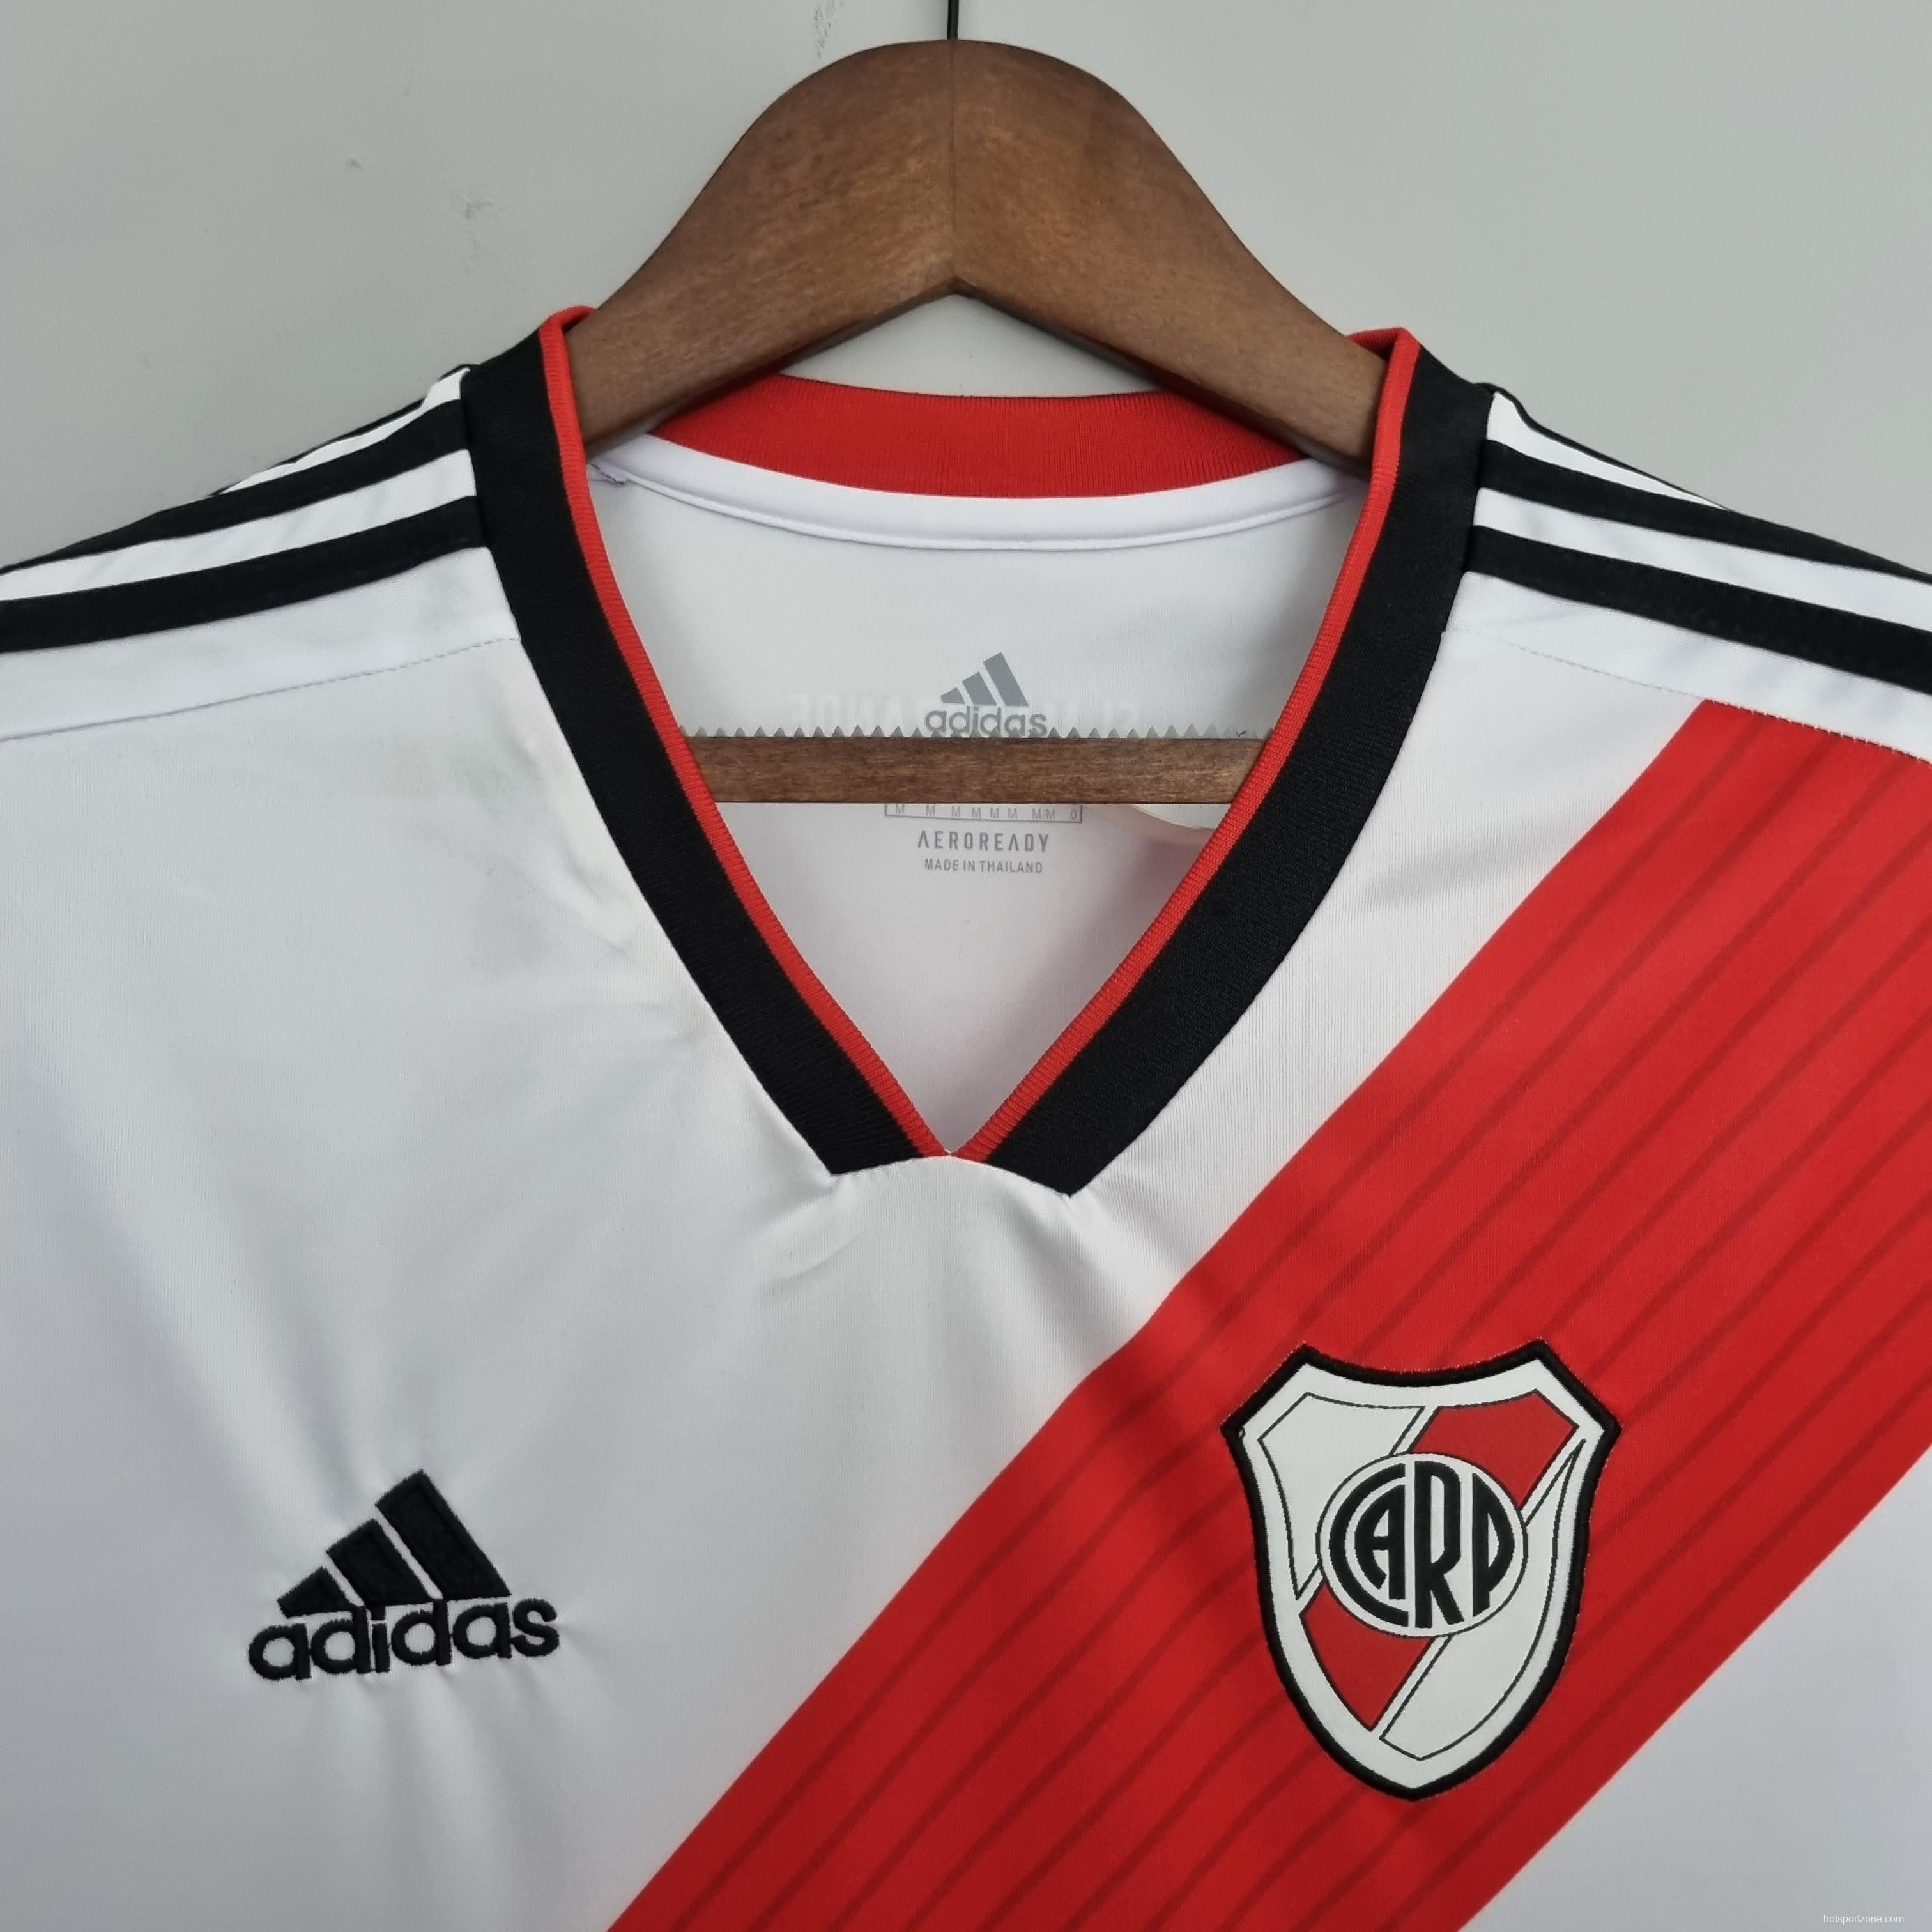 Retro River Plate18/19 home Soccer Jersey